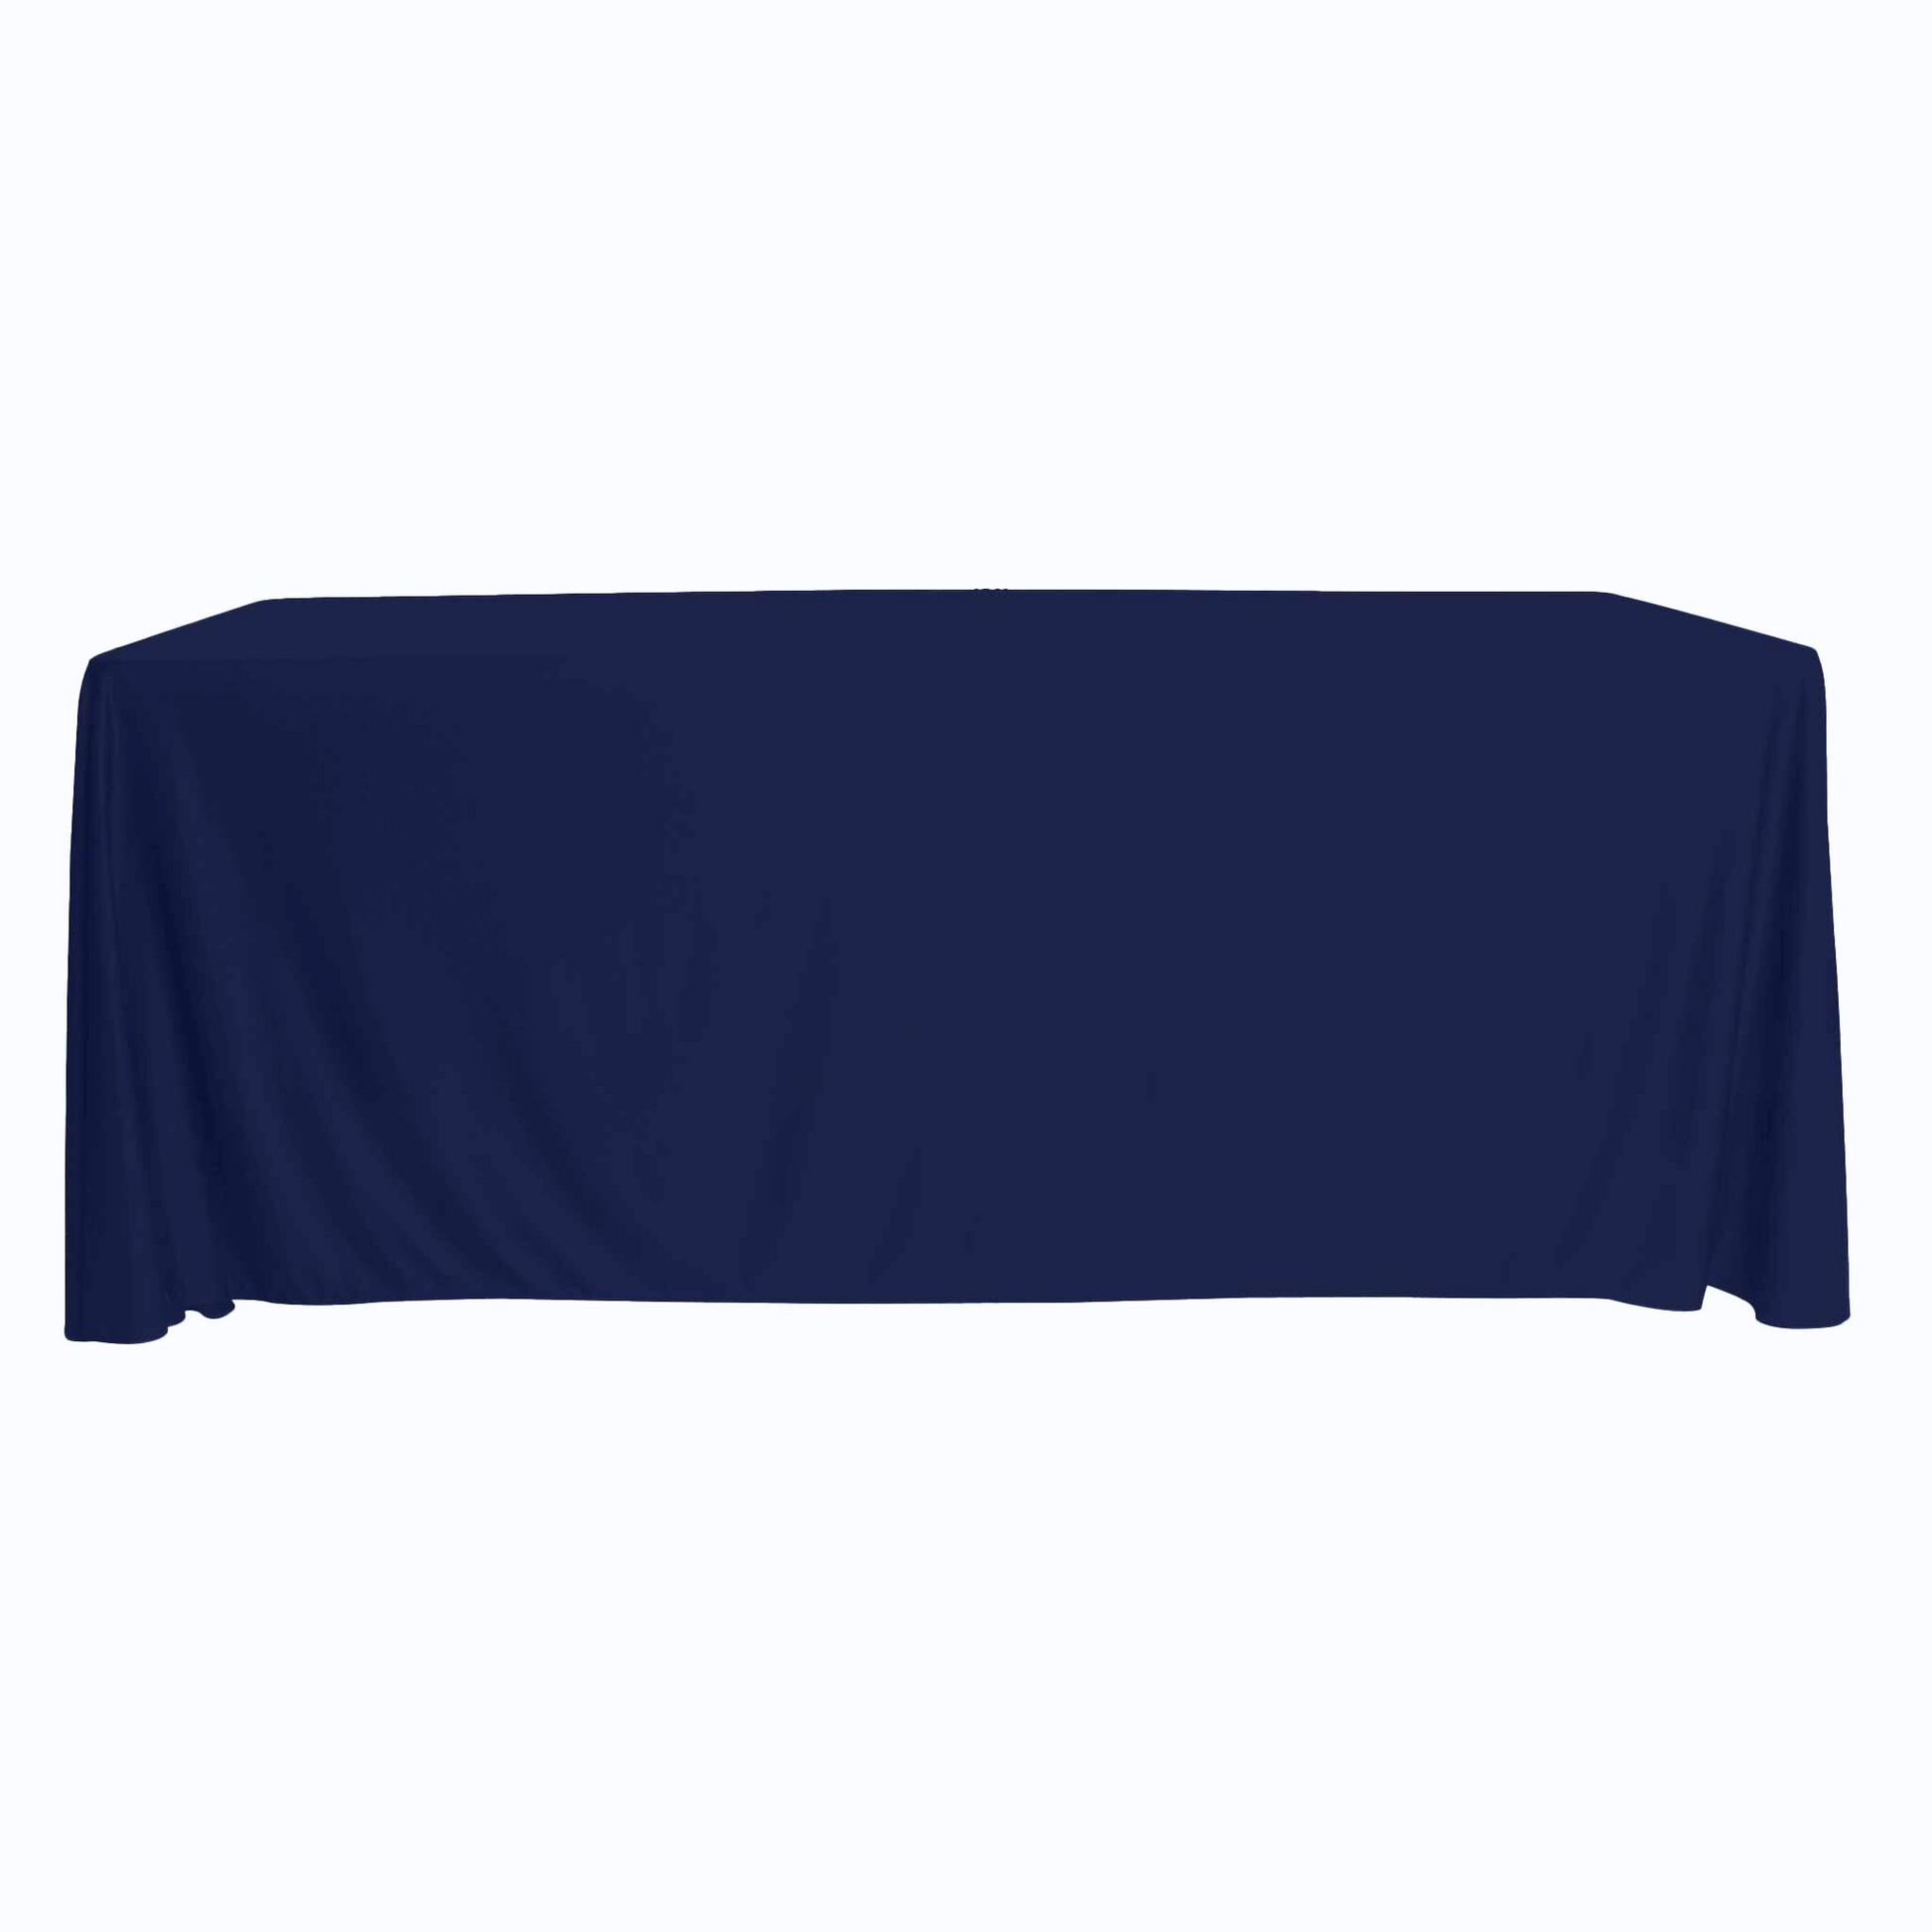 Scuba 90"x156" Rectangular Oblong Tablecloth - Navy Blue